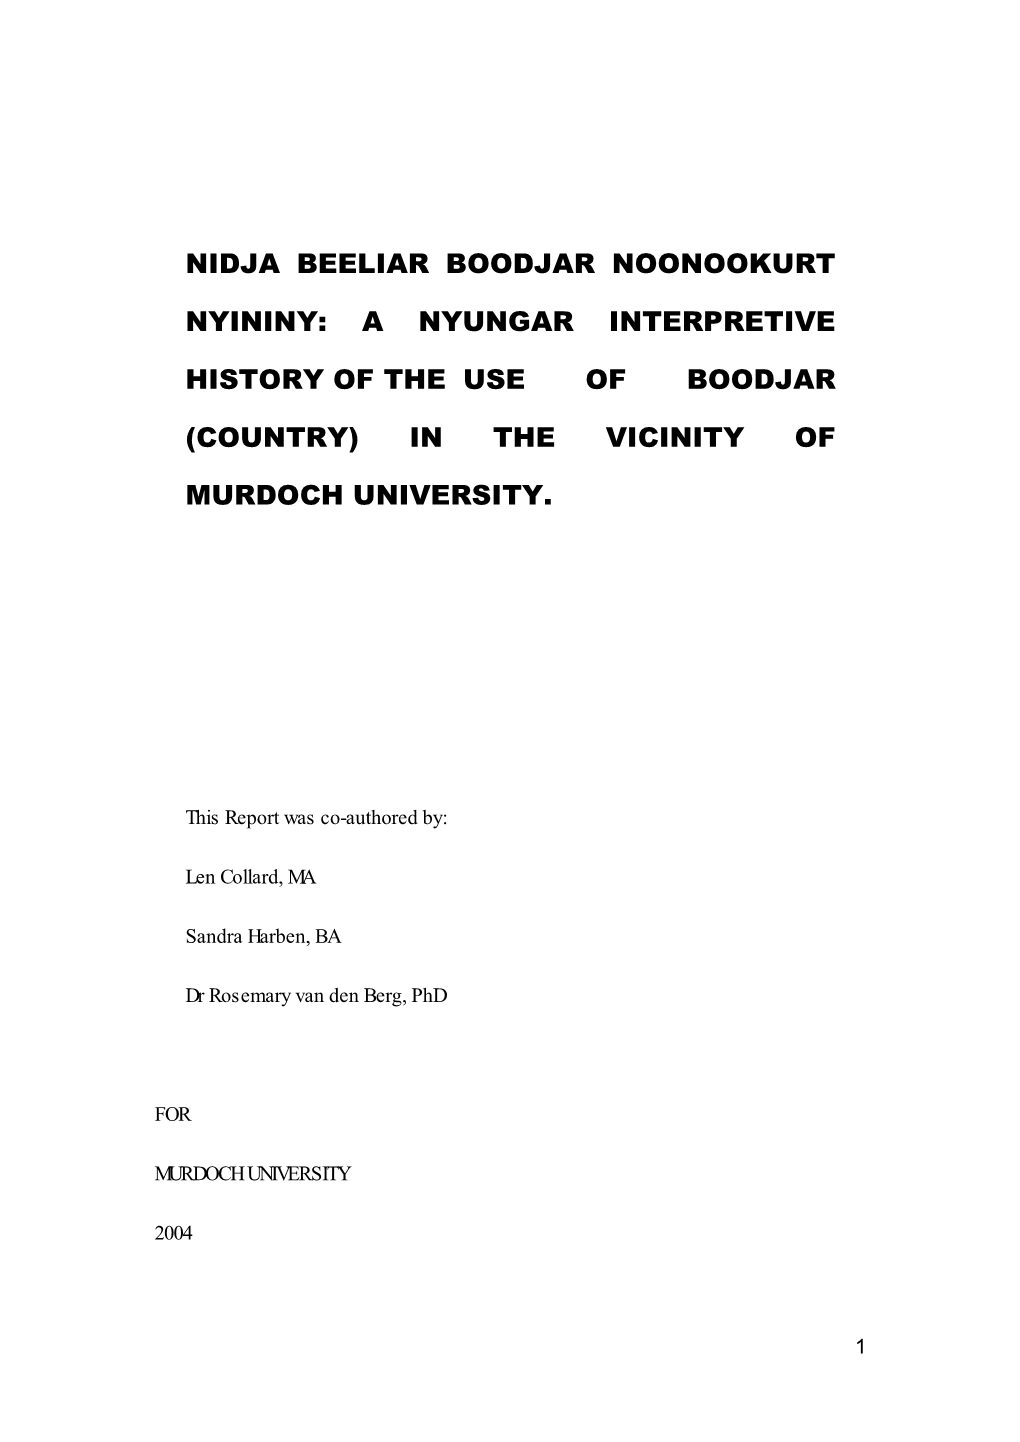 Nidja Beeliar Boodjar Noonookurt Nyininy: a Nyungar Interpretive History of the Use of Boodjar (Country) in the Vicinity of Murdoch University